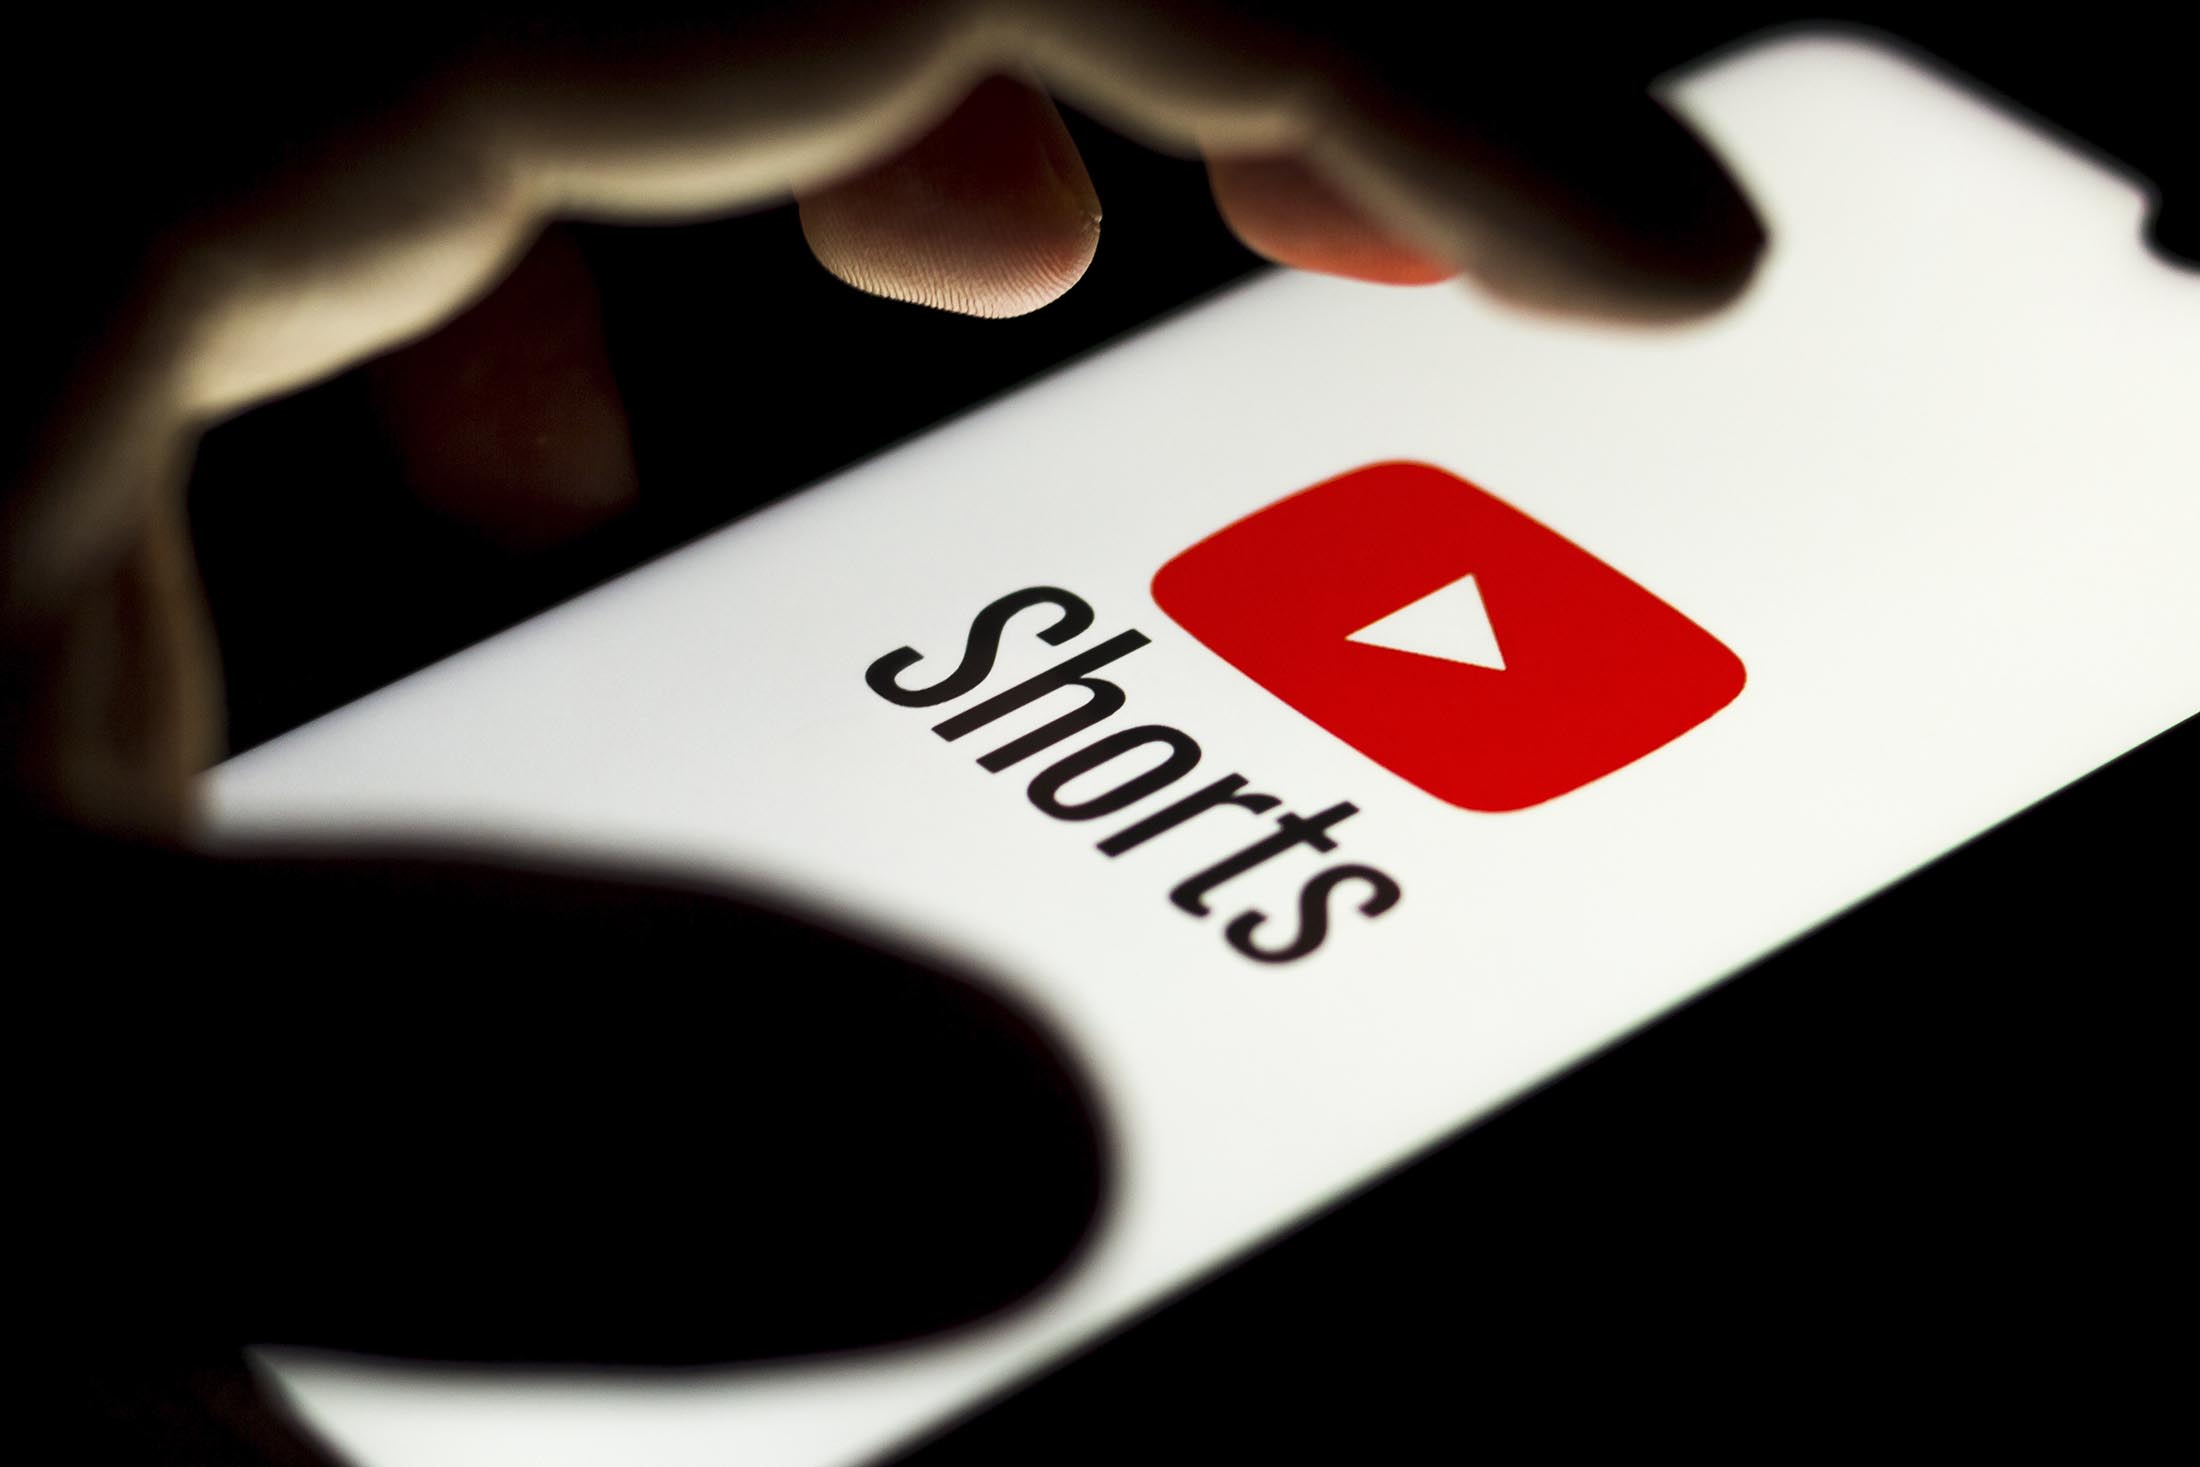 YouTube takes on TikTok by launching "YouTube Shorts"